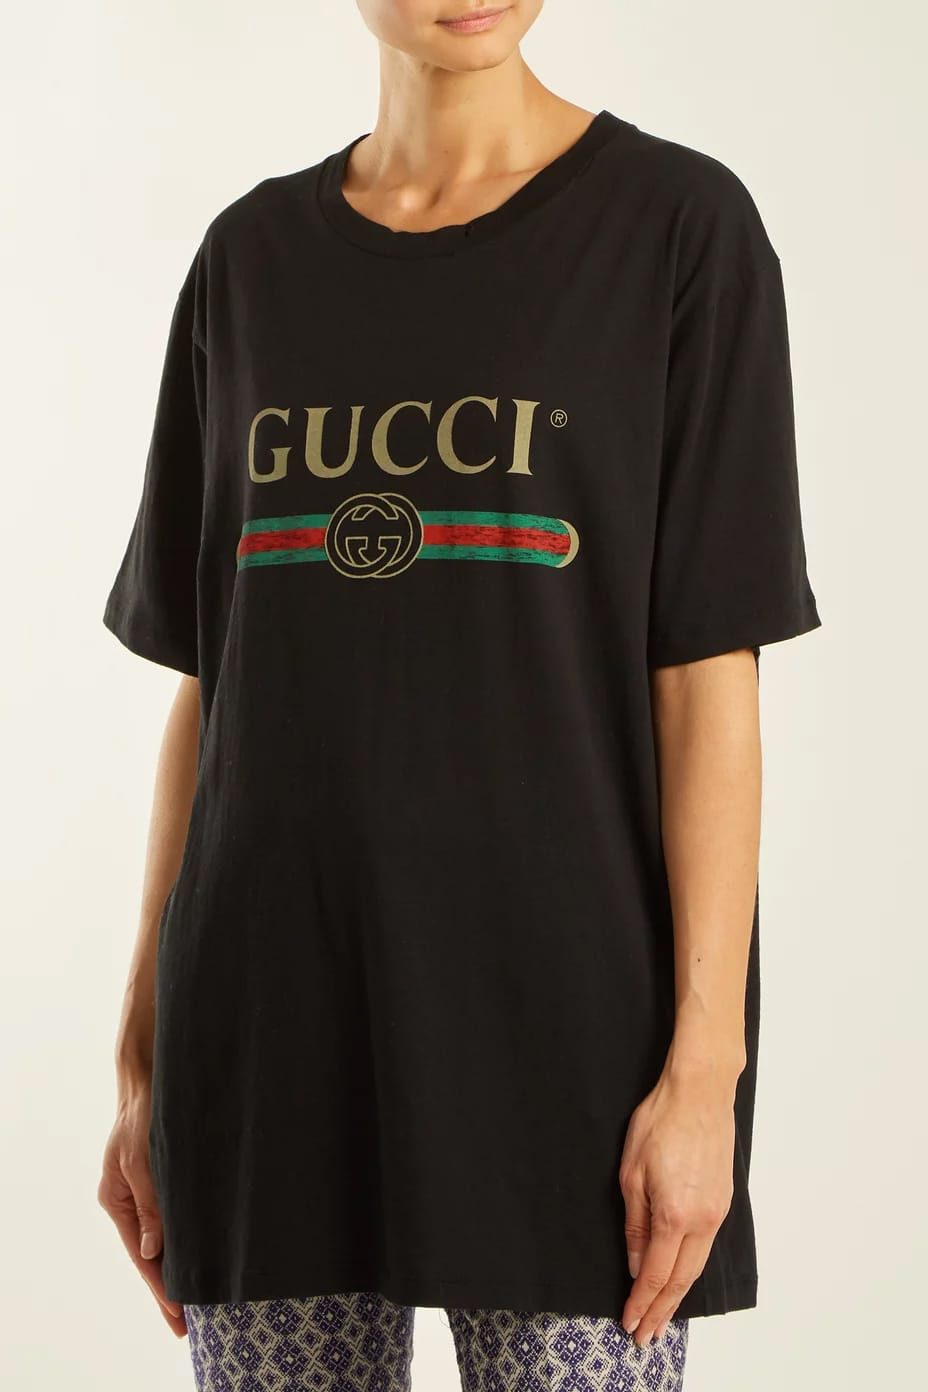 vintage gucci t shirt